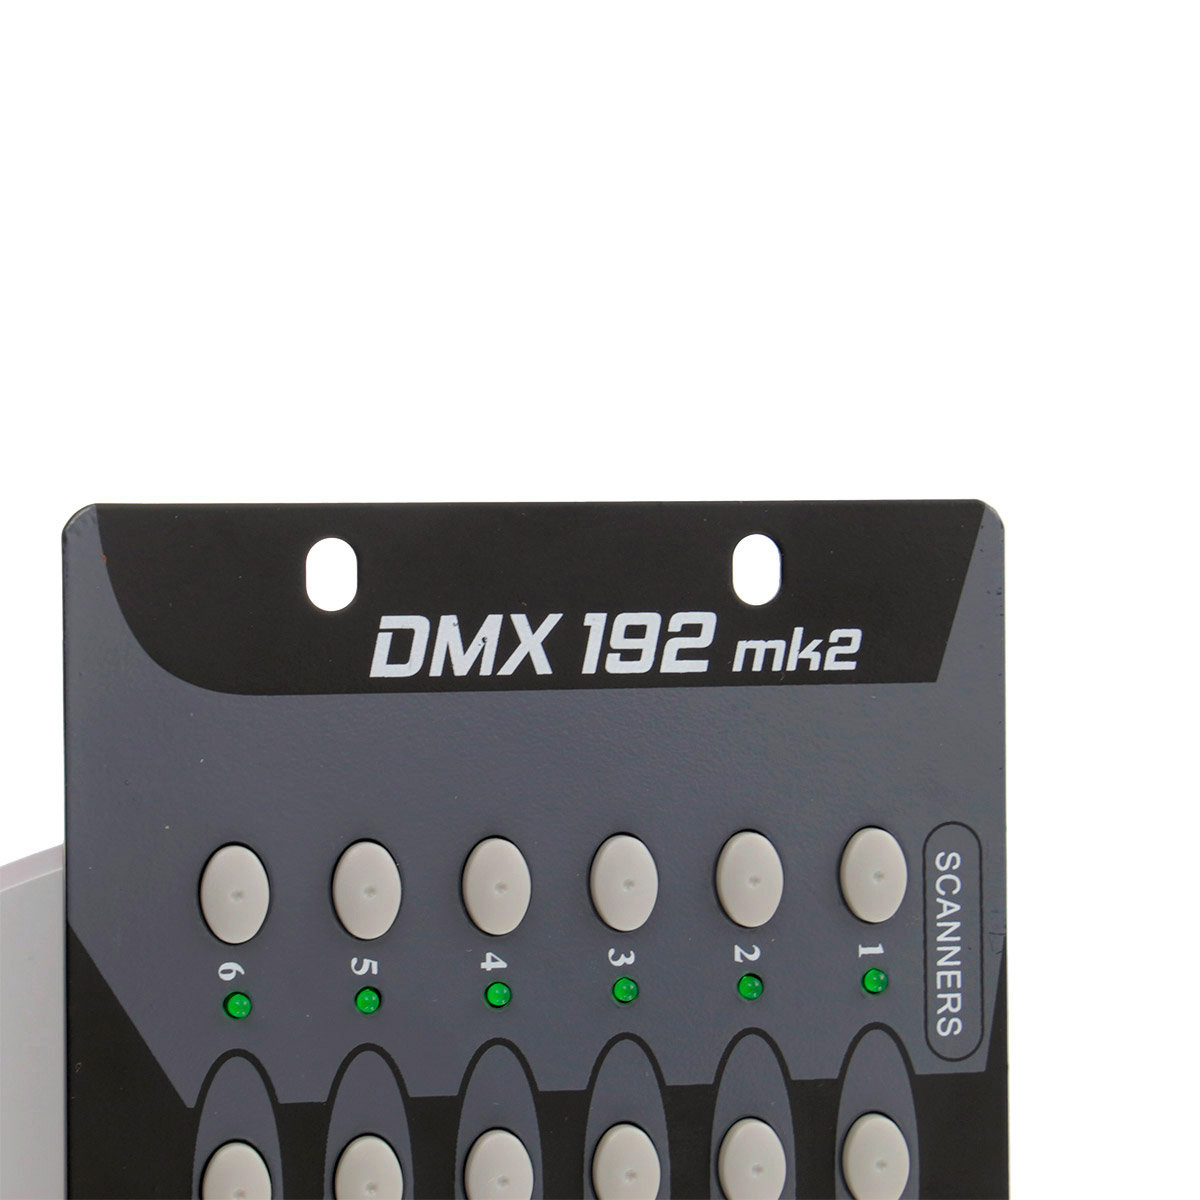 DMX 192 mk2 : Contrôleur DMX BoomTone DJ - BoomtoneDJ